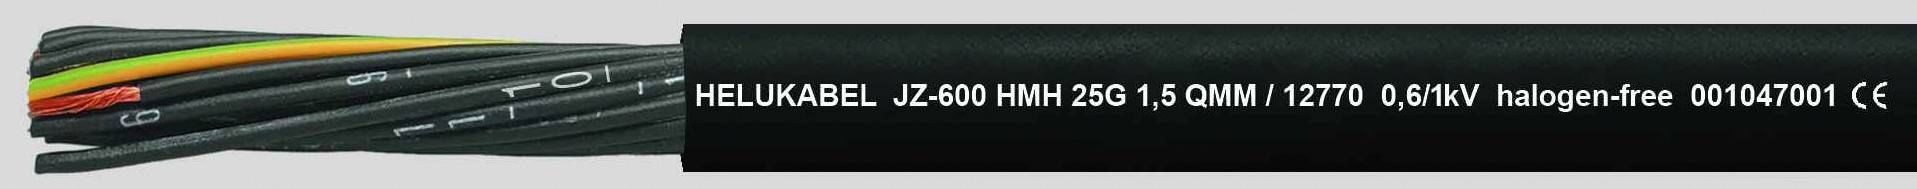 HELUKABEL JZ-500 HMH Steuerleitung 2 x 0.75 mm² Schwarz 12735-1000 1000 m